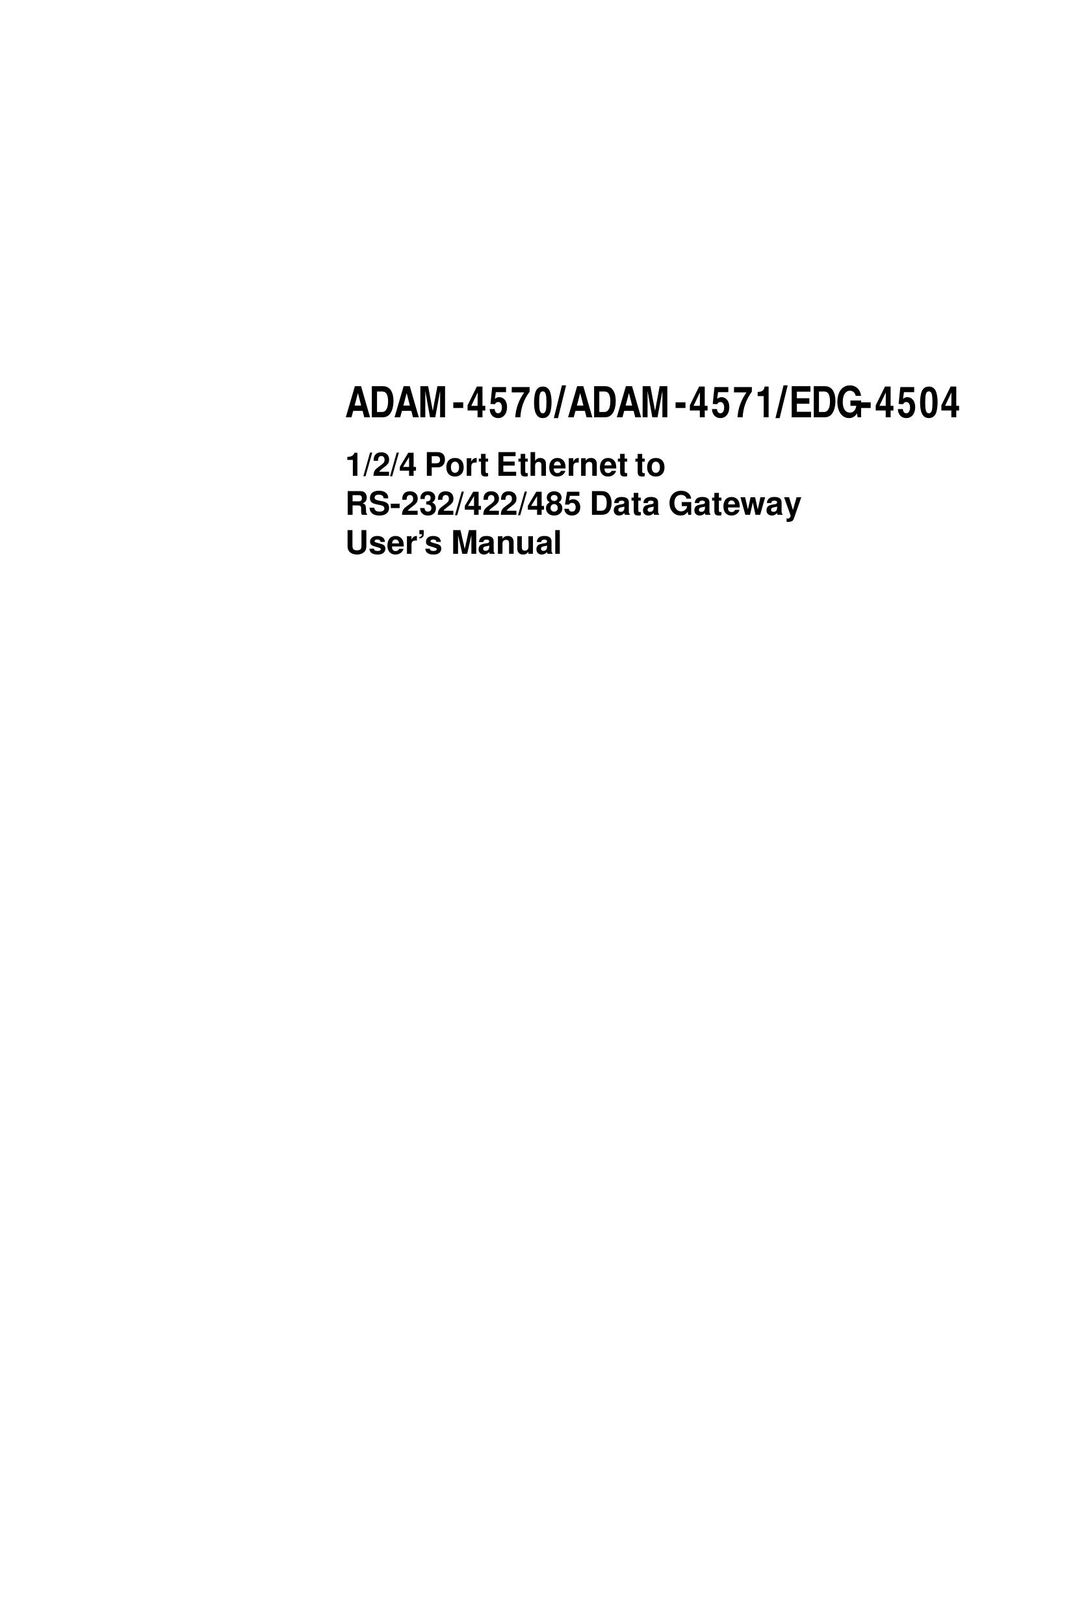 Advantech ADAM-4570 Switch User Manual